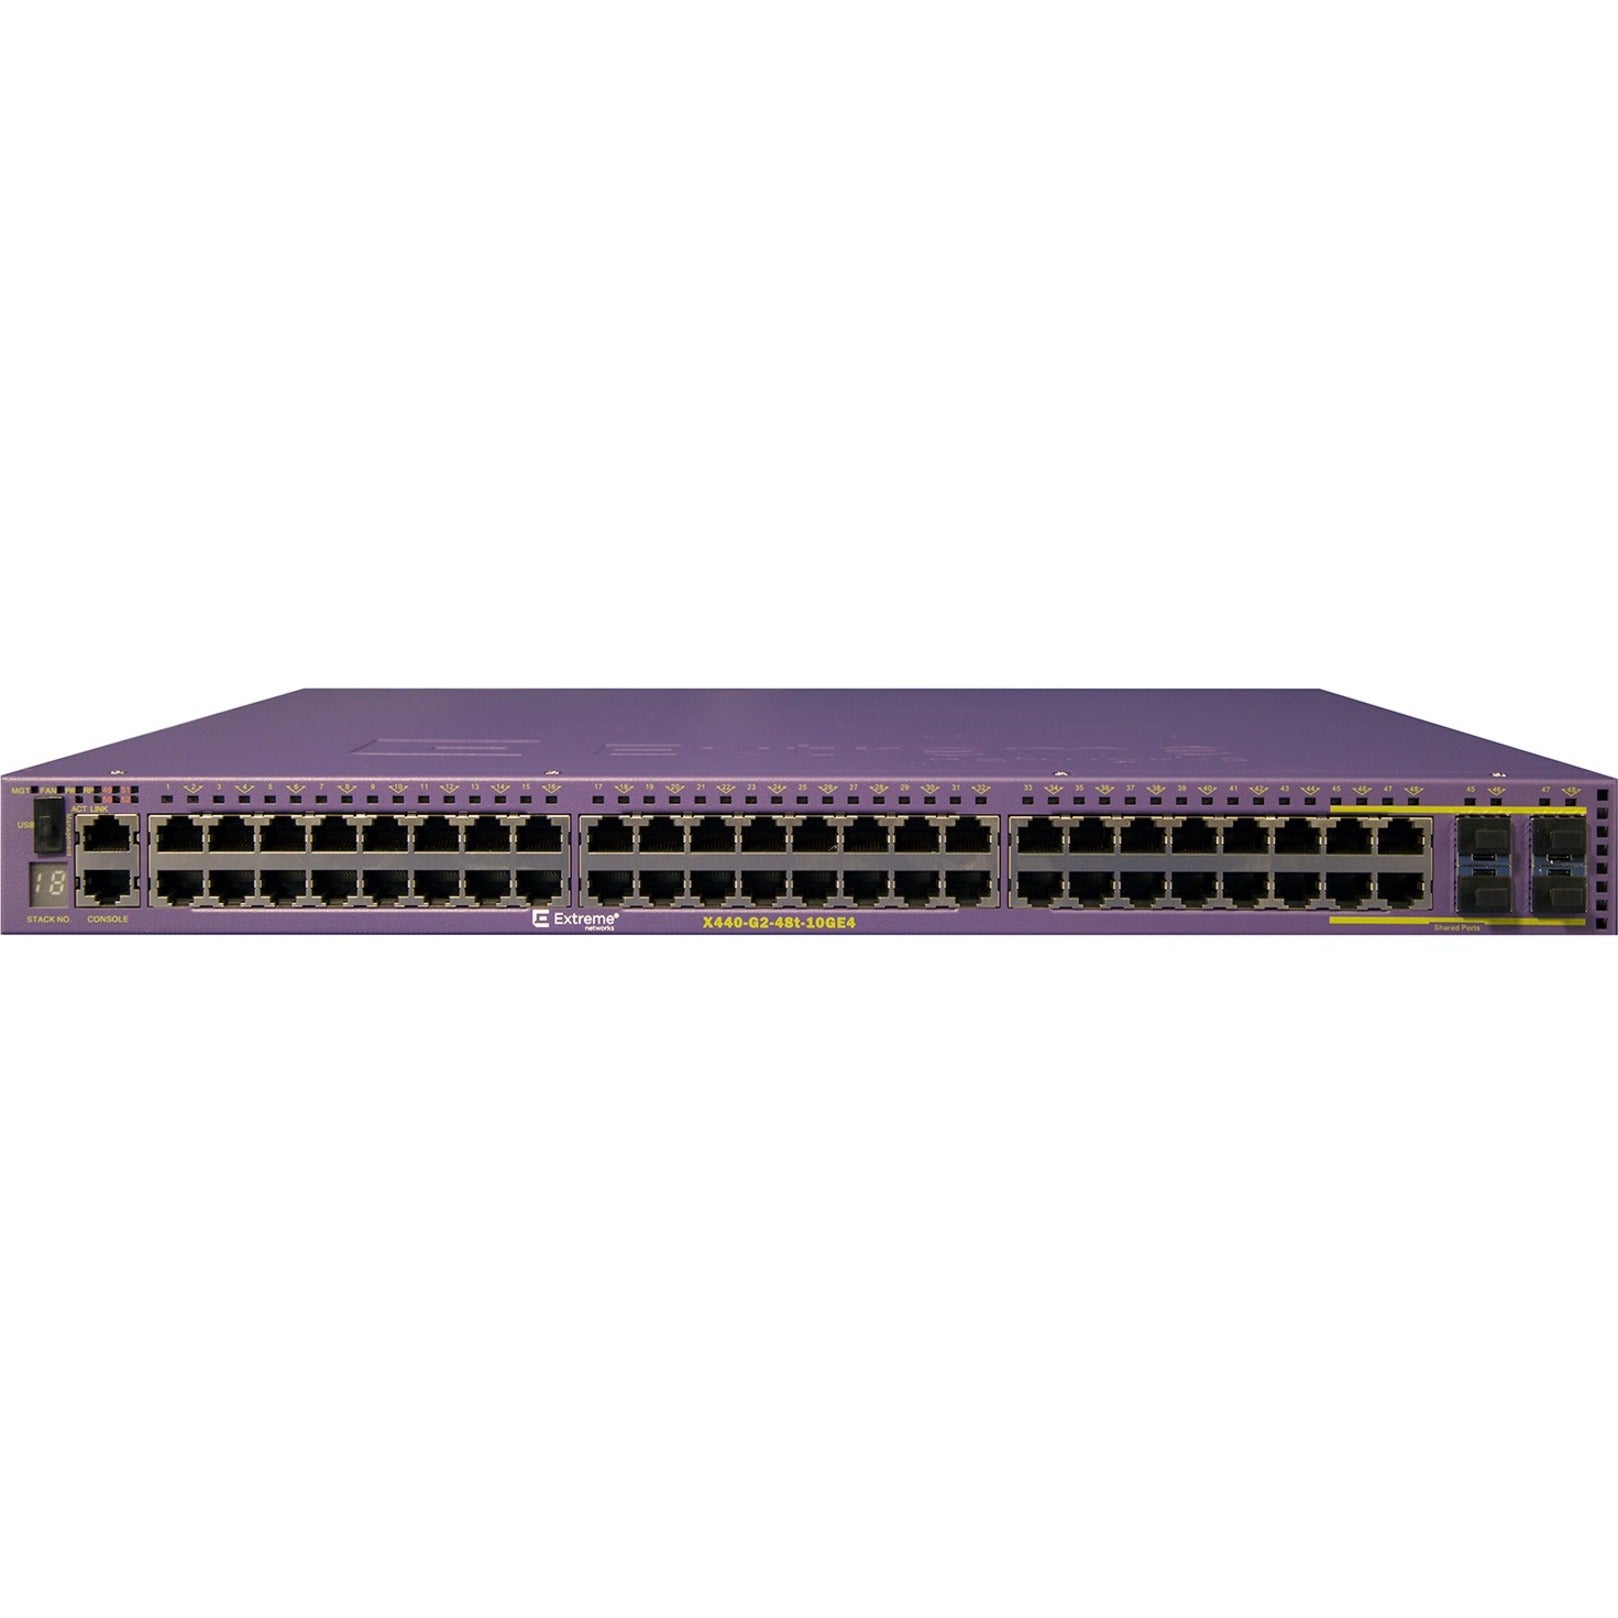 Extreme Networks 16534 X440-G2-48t-10GE4 이더넷 스위치 기가비트 이더넷 48 네트워크 포트